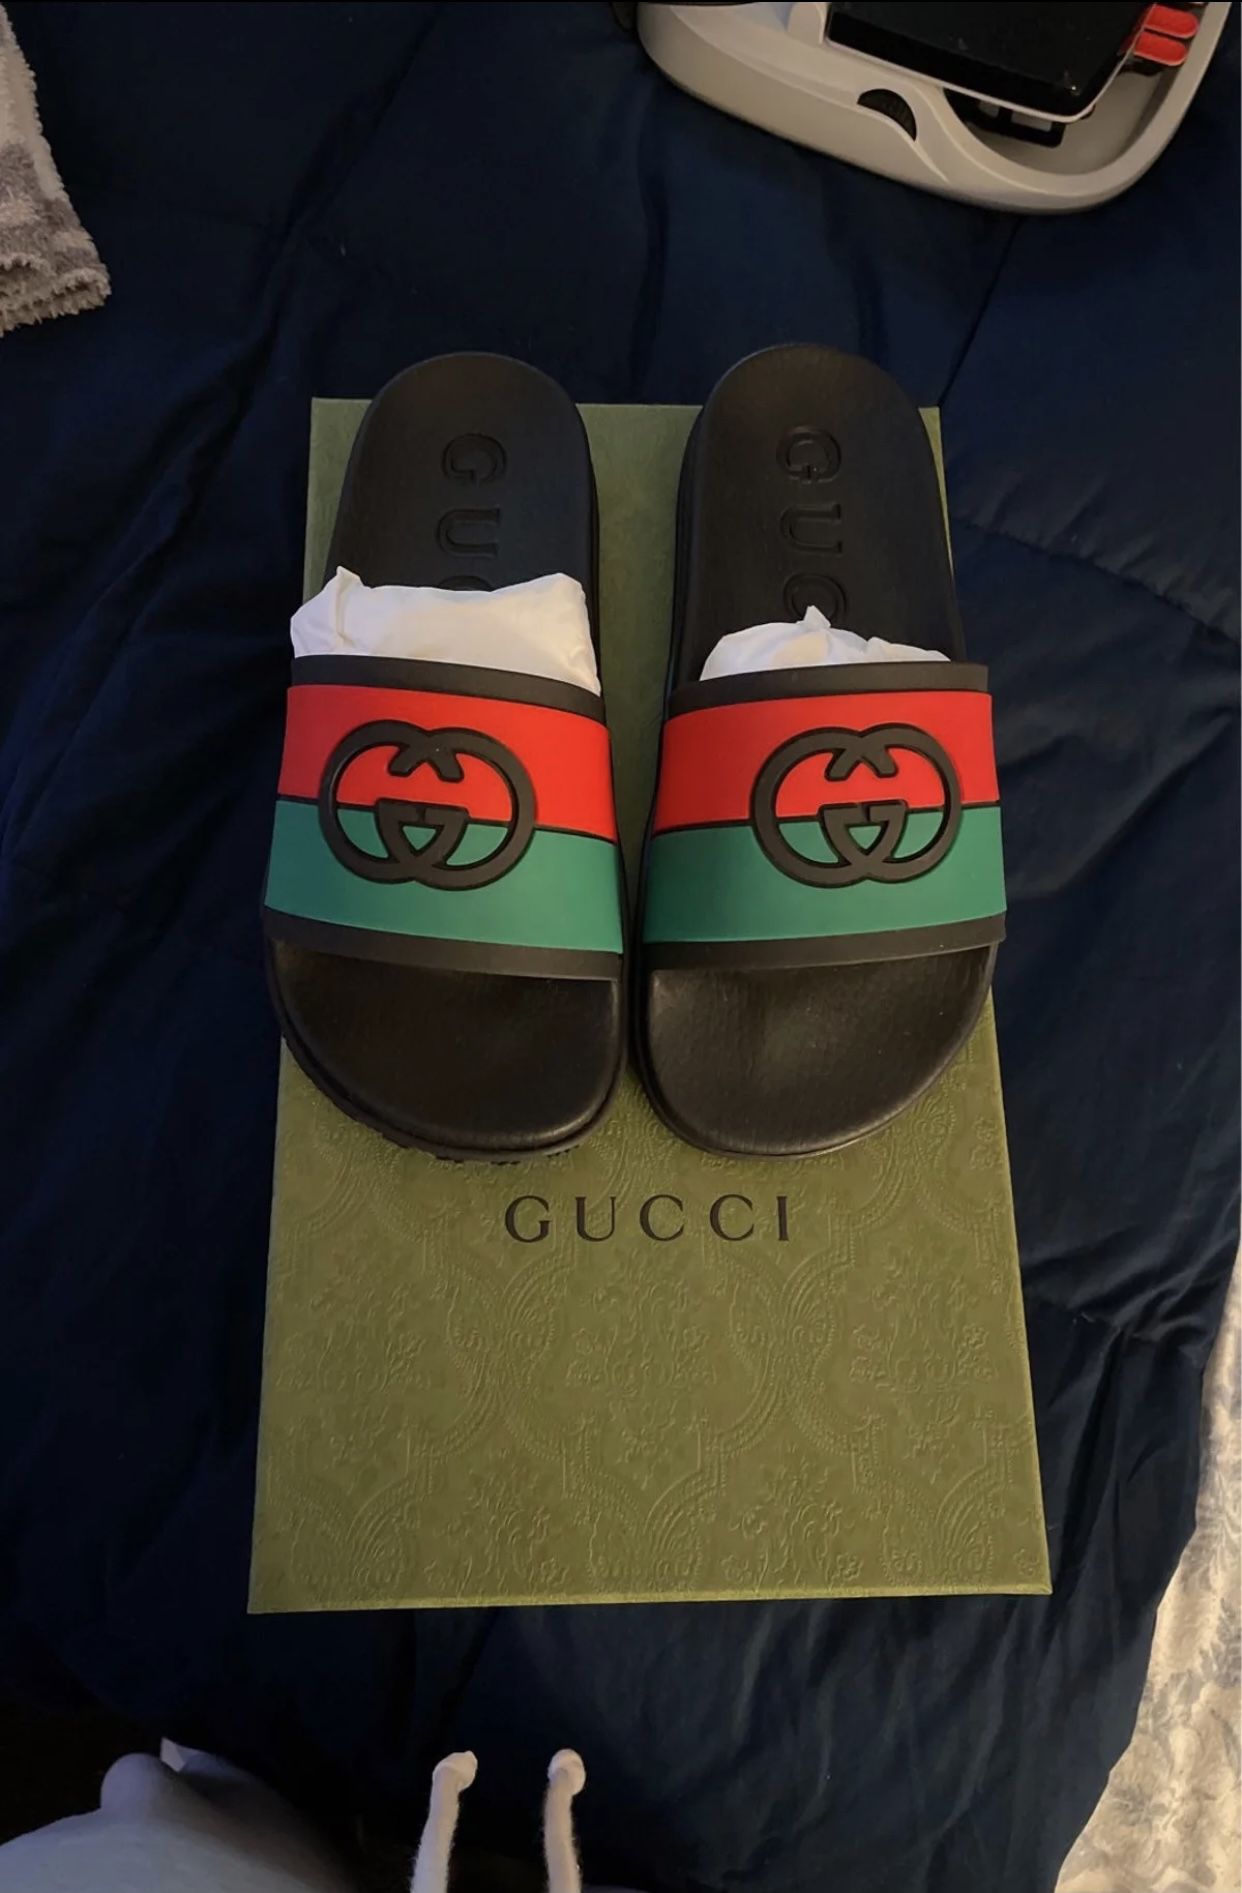 New Gucci Slides - Men’s Size 11